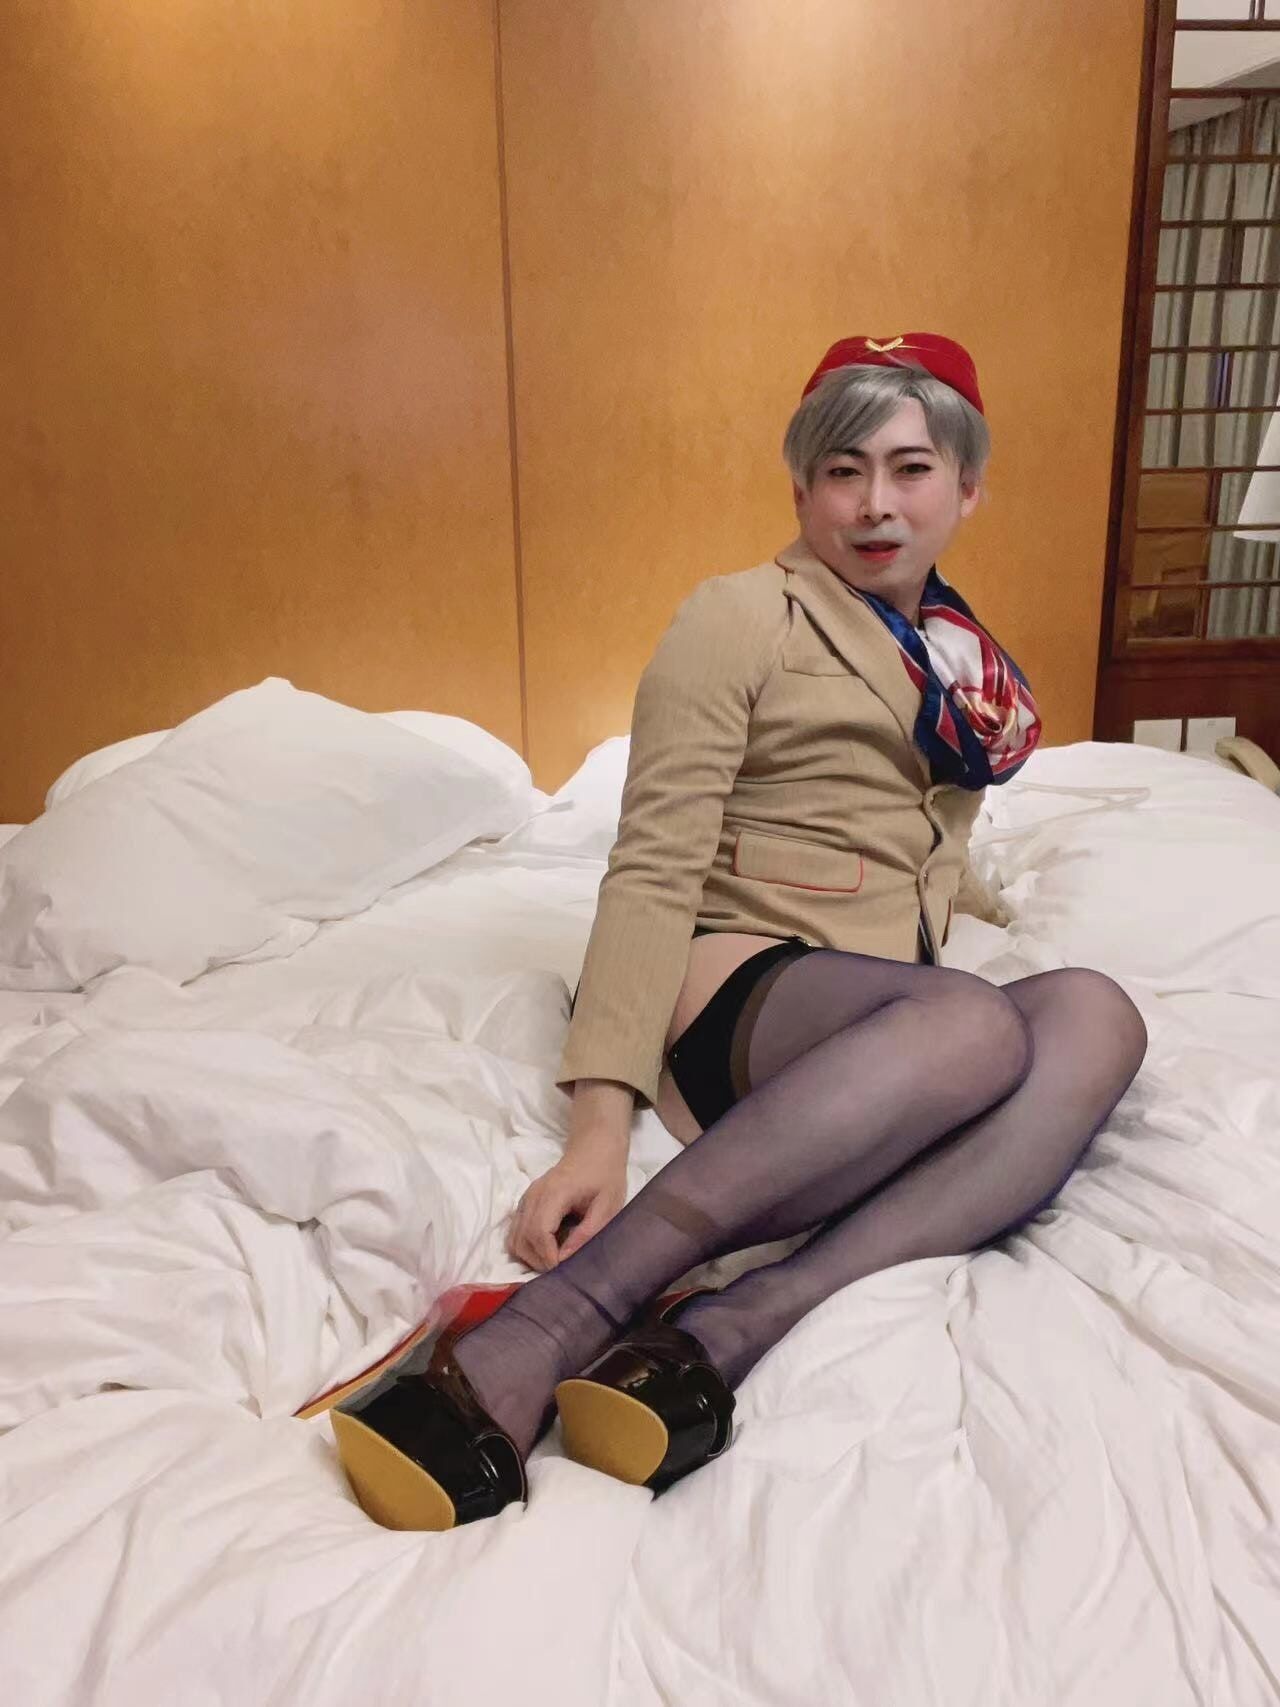 Asian femboy sissy in Emirates flight attendant dress #12